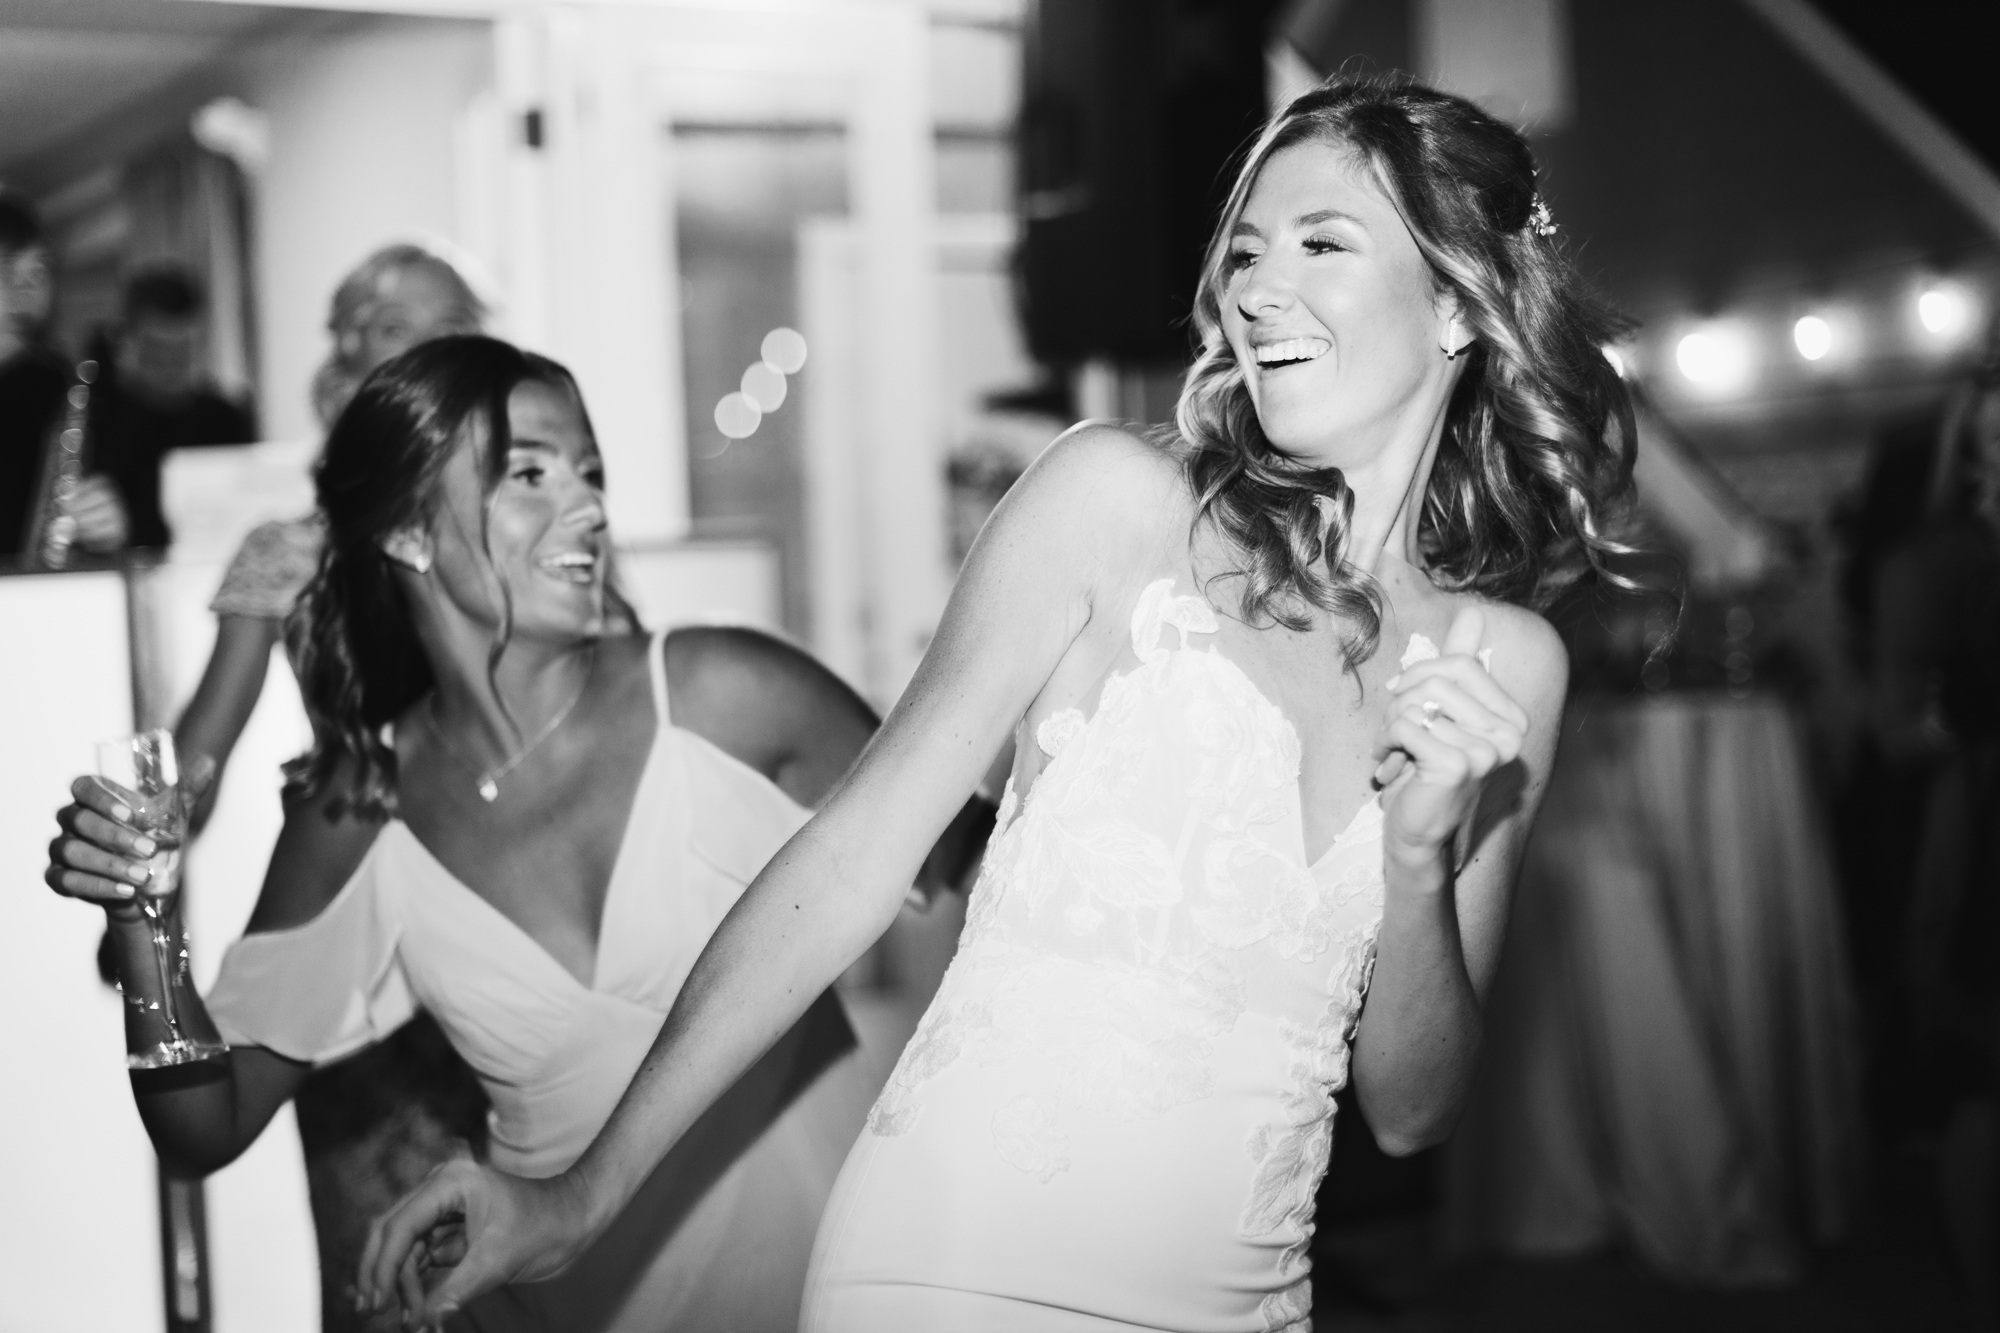 Long Island wedding photographers capturing a dance floor